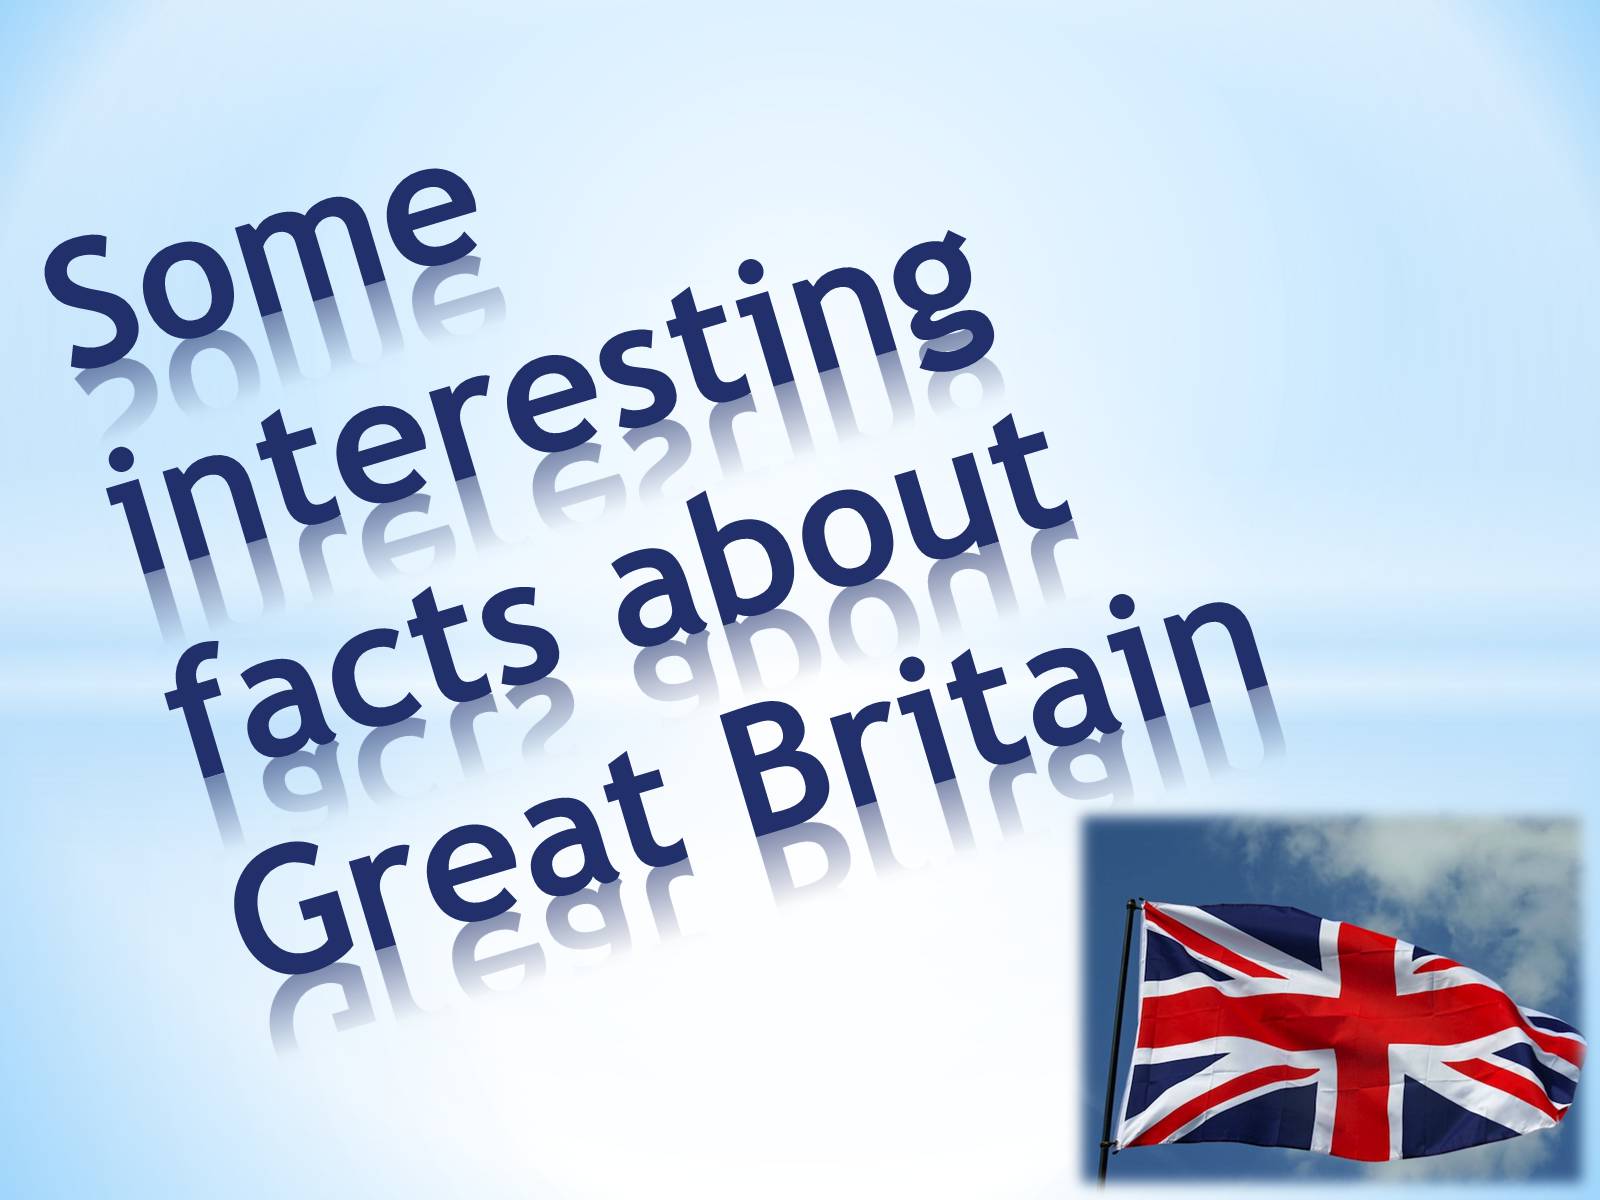 Презентація на тему «Some interesting facts about Great Britain» - Слайд #1